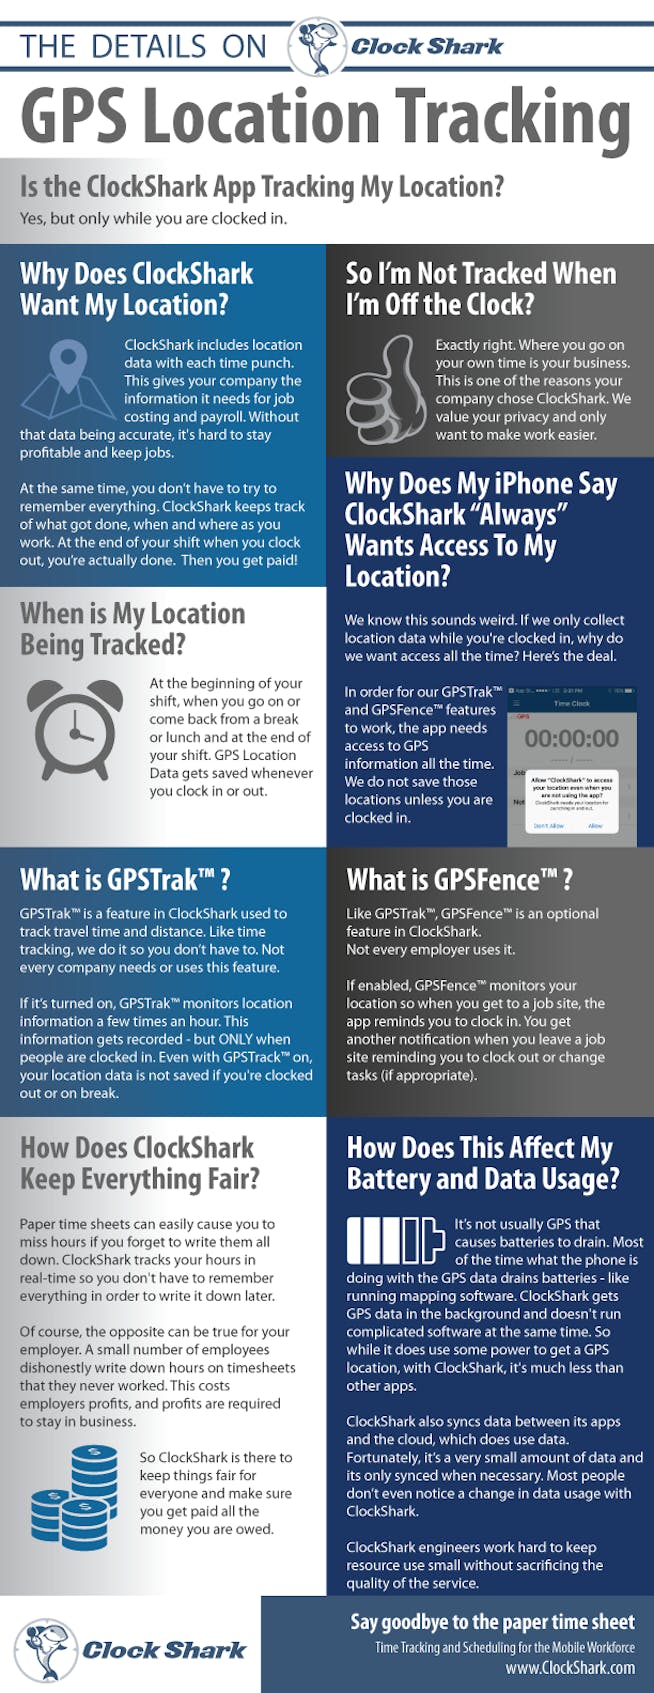 ClockShark Feature: The Details on ClockShark GPS Tracking